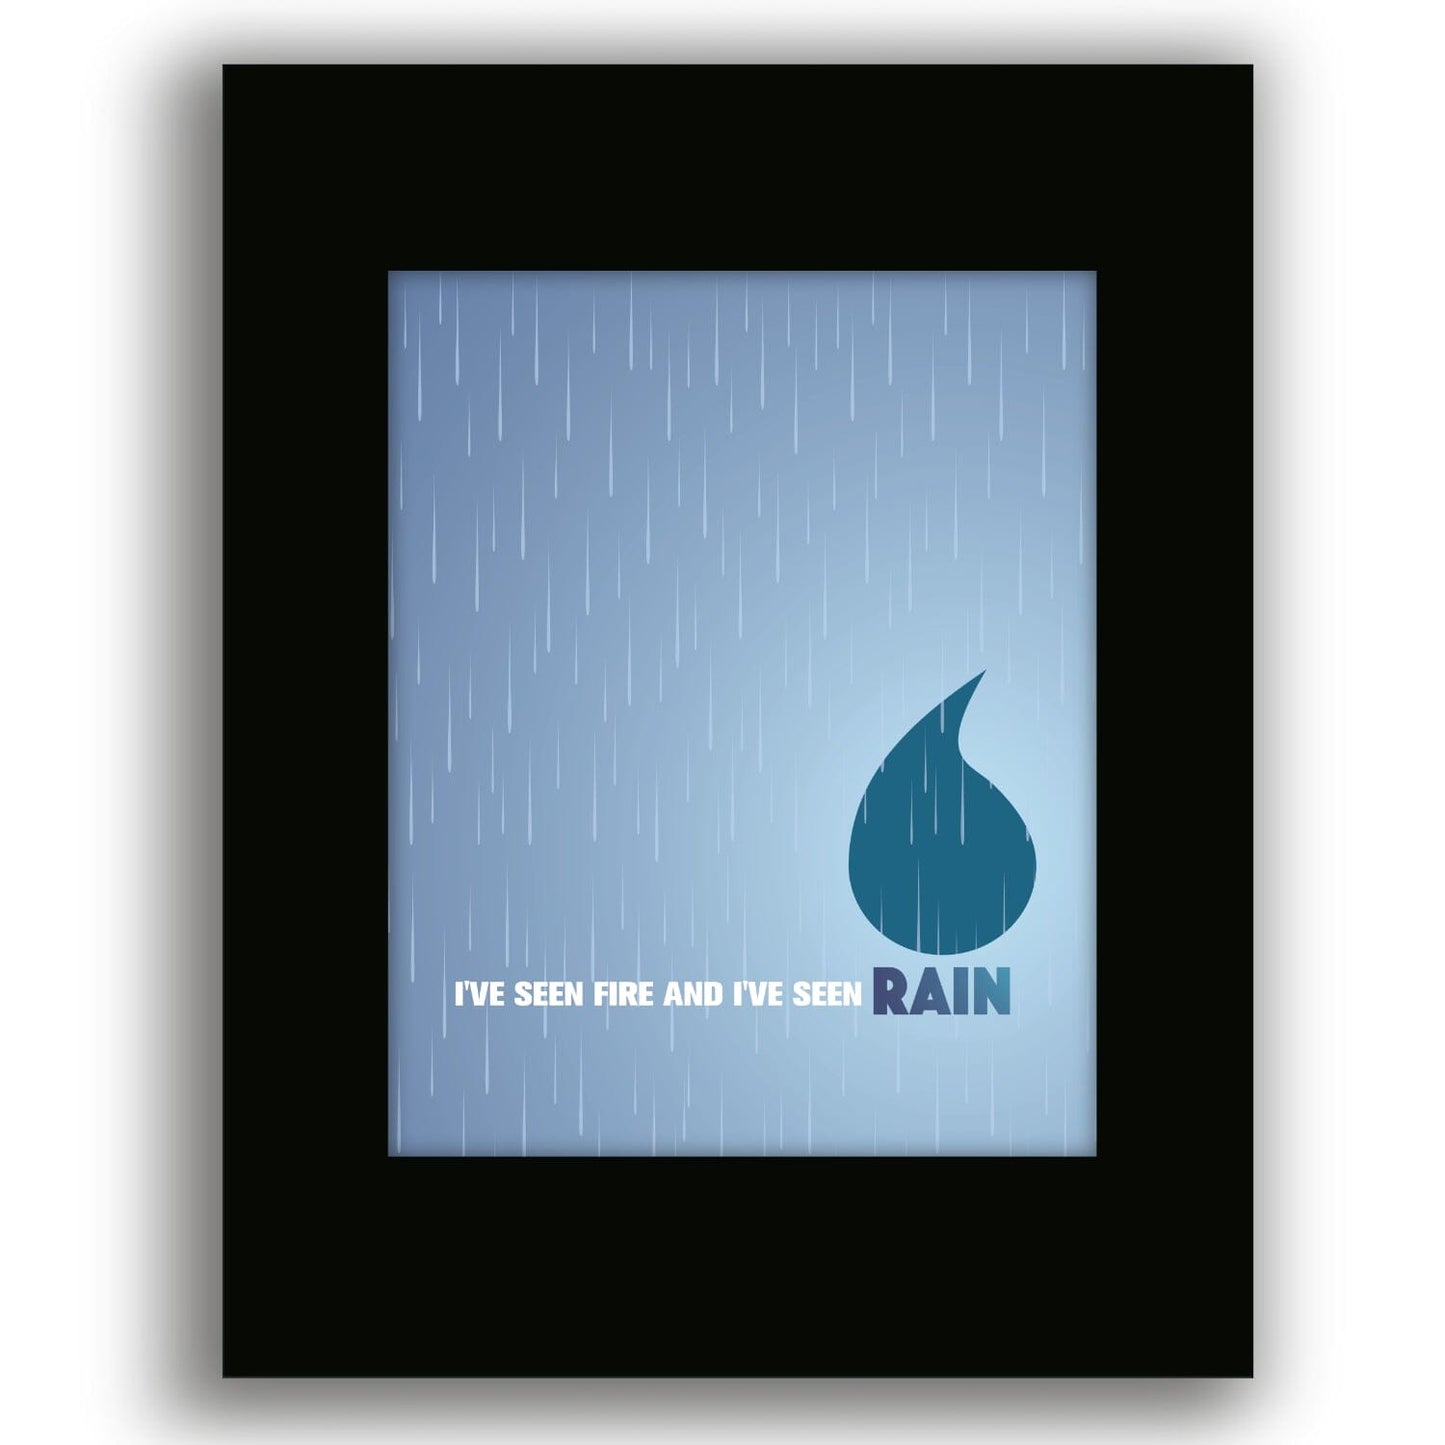 Fire and Rain by James Taylor - Music Wall Art Print Poster Song Lyrics Art Song Lyrics Art 8x10 Black Matted Print 